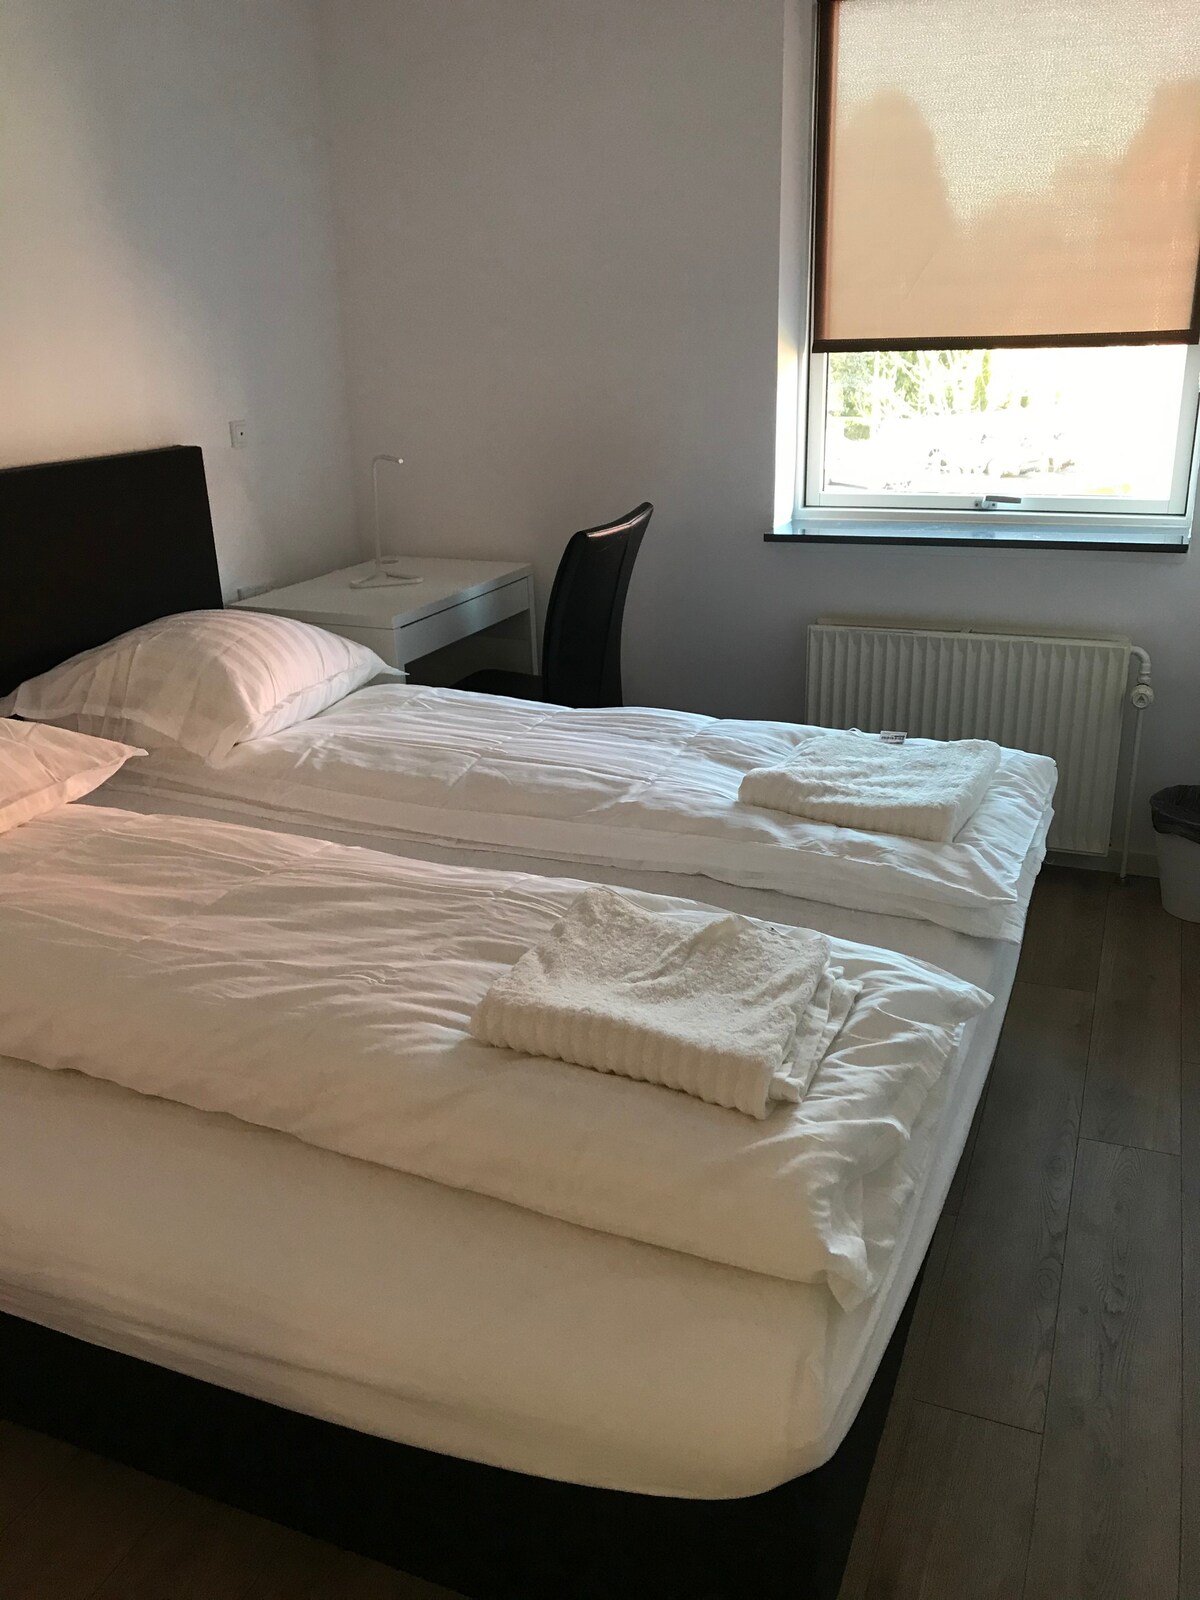 4）New renovated room in Hvidovre